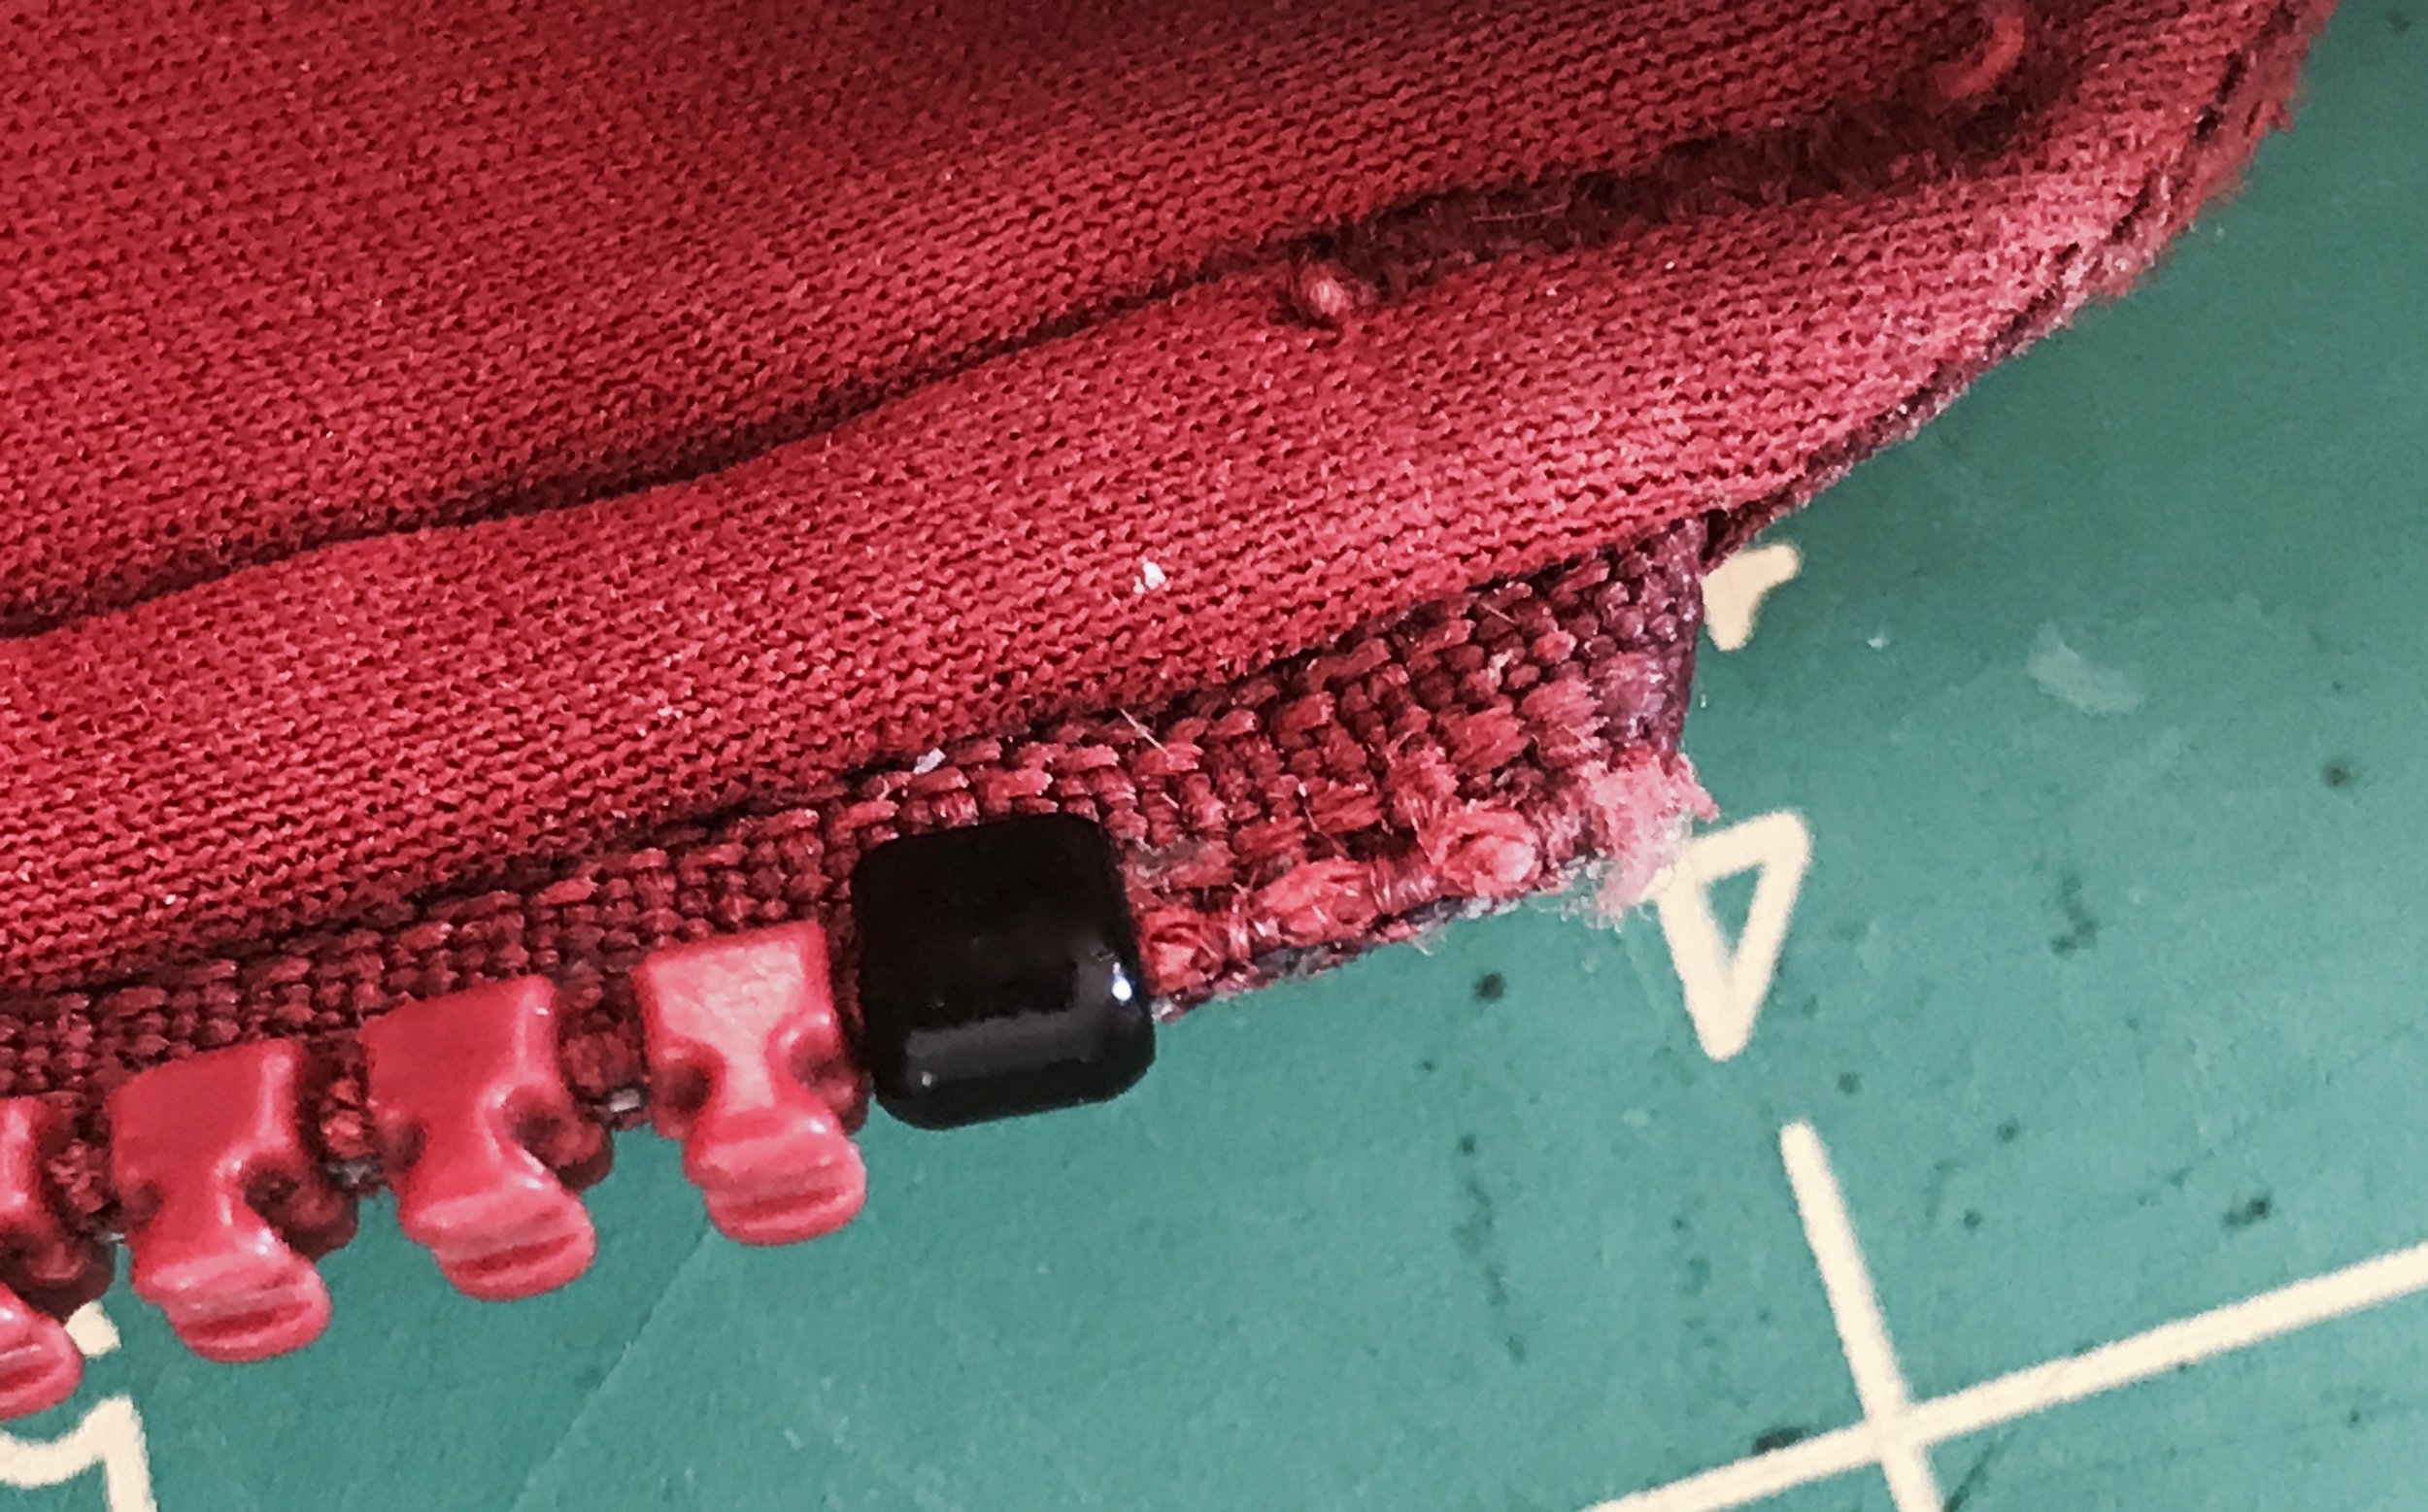 How to Fix a Zipper: Replace Zipper Pull and Replace Zipper Stops